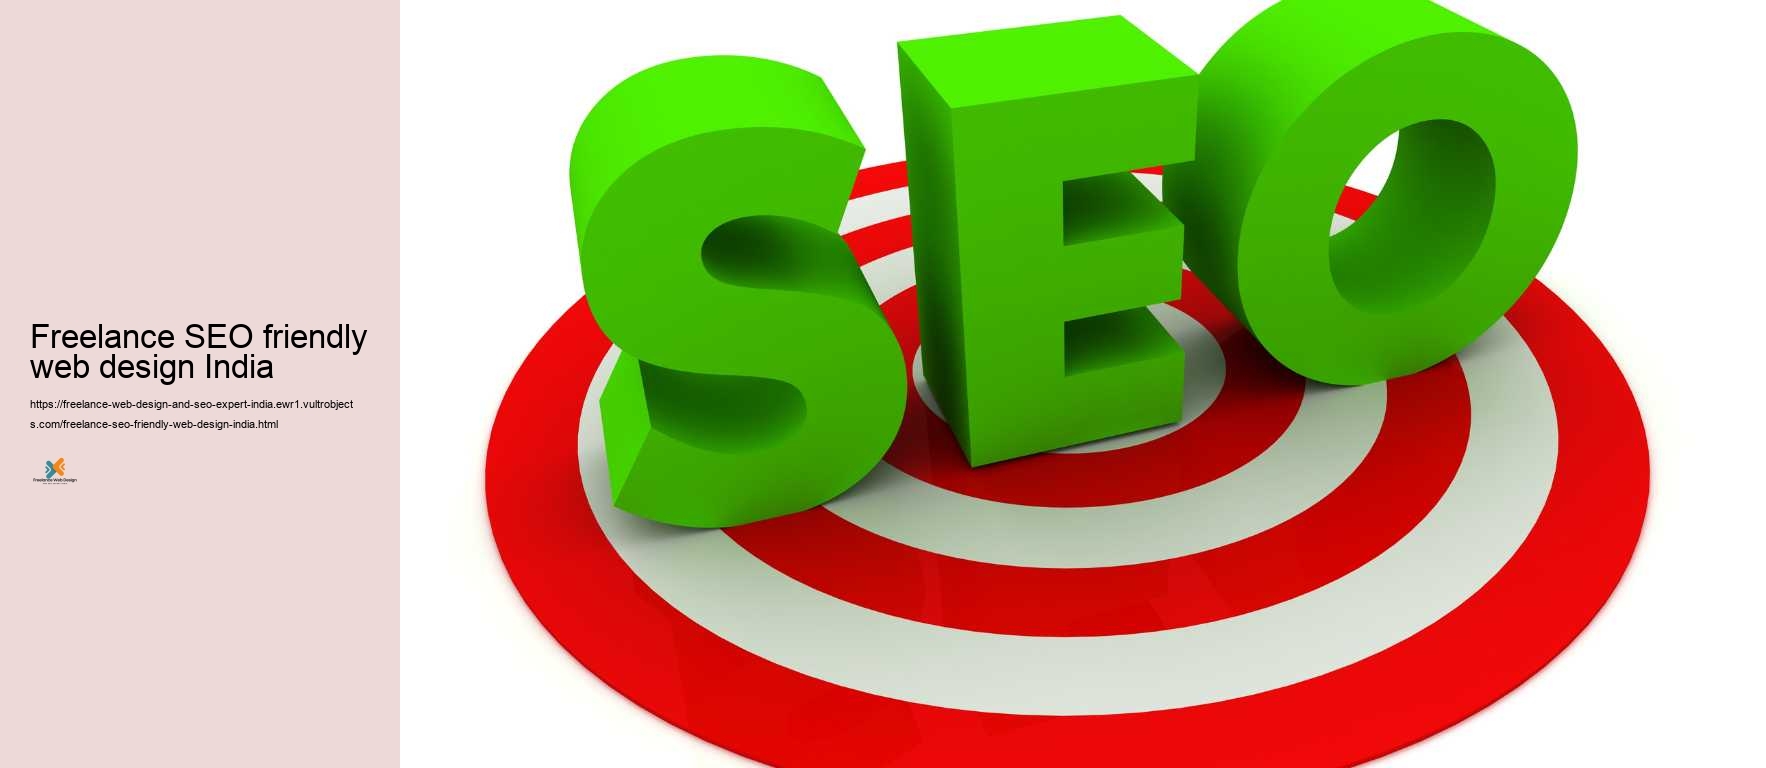 Freelance SEO friendly web design India